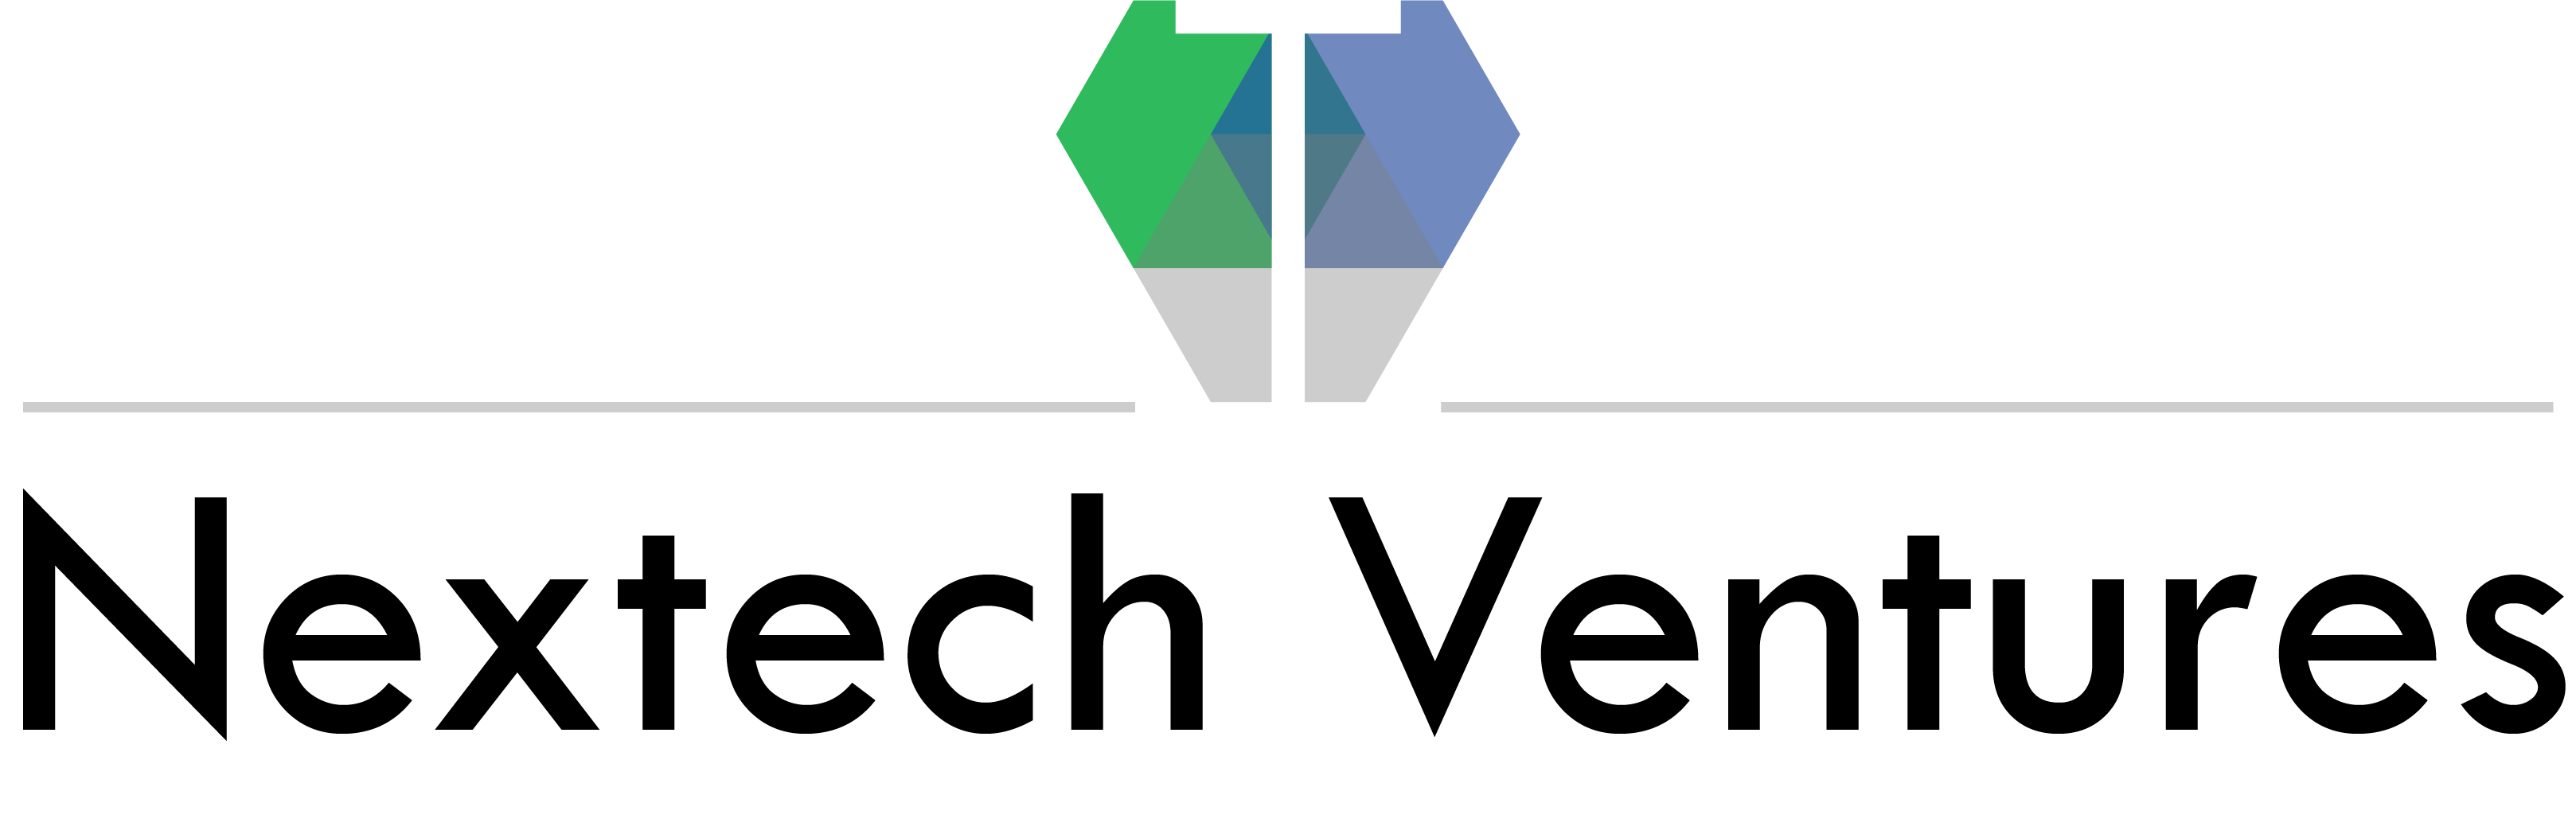 Nextech Ventures